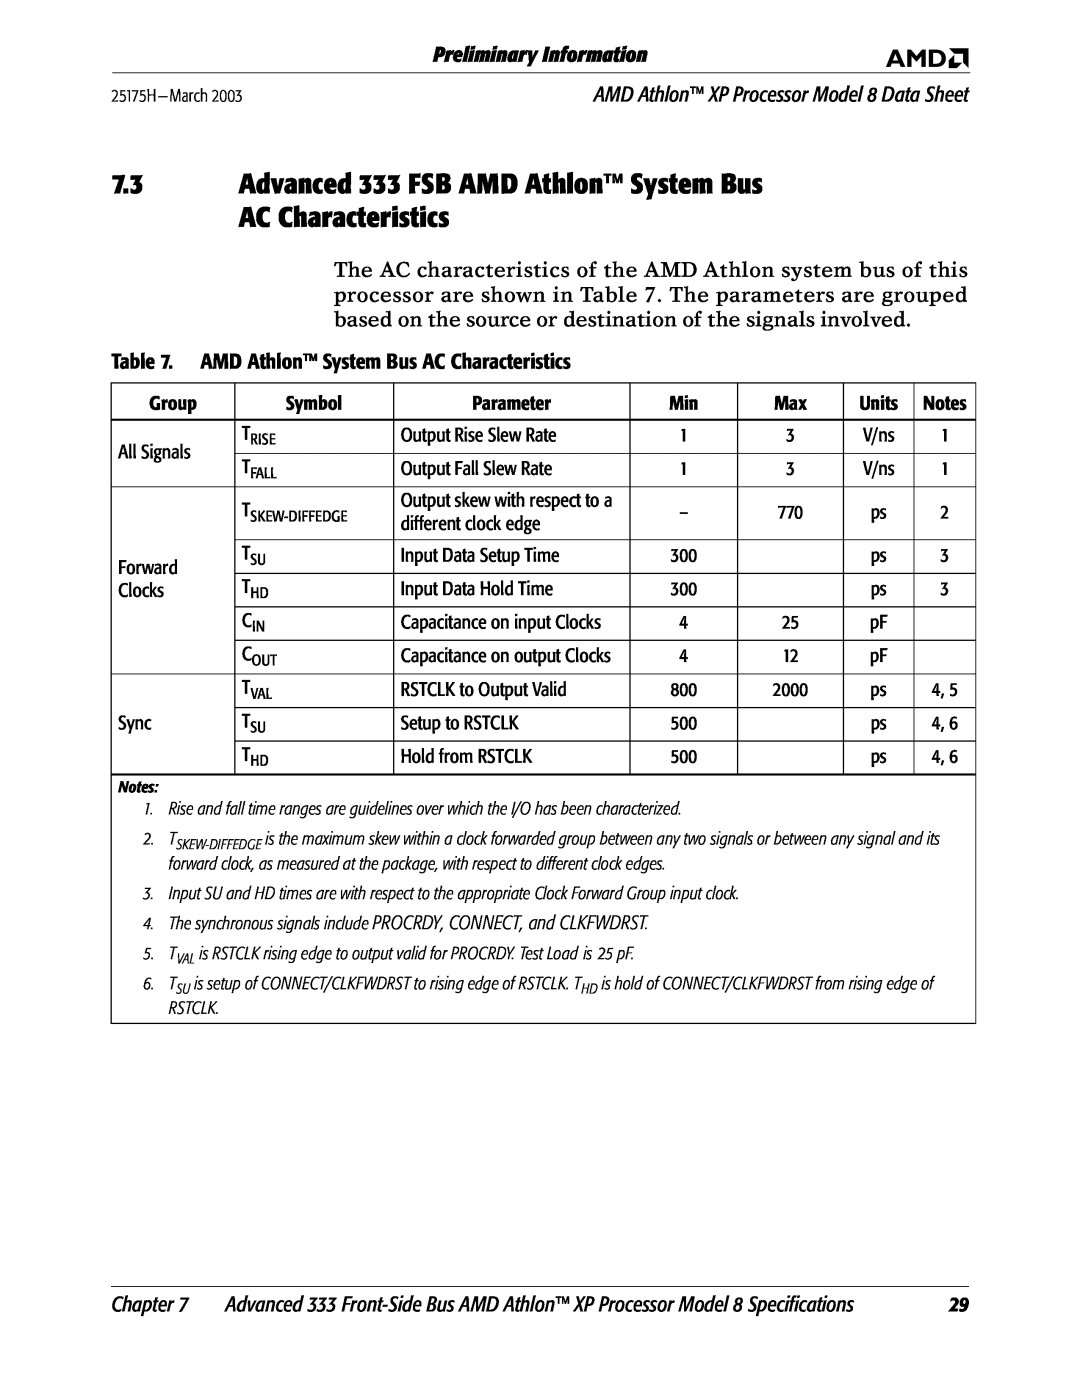 AMD 8 manual Advanced 333 FSB AMD Athlon System Bus AC Characteristics, Preliminary Information, Chapter 